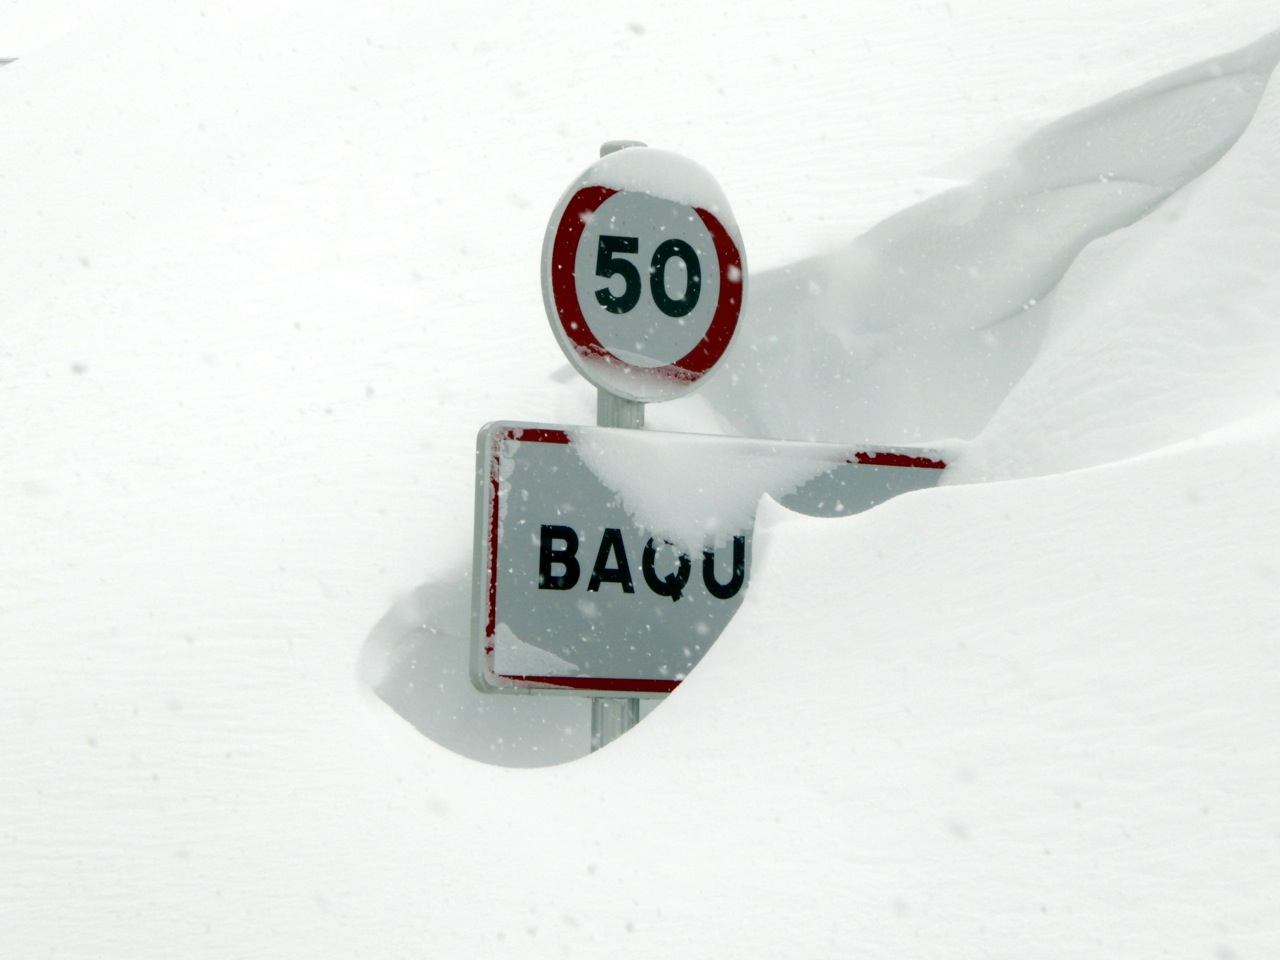 Baqueira Beret cierra una temporada histórica batiendo récords de nieve